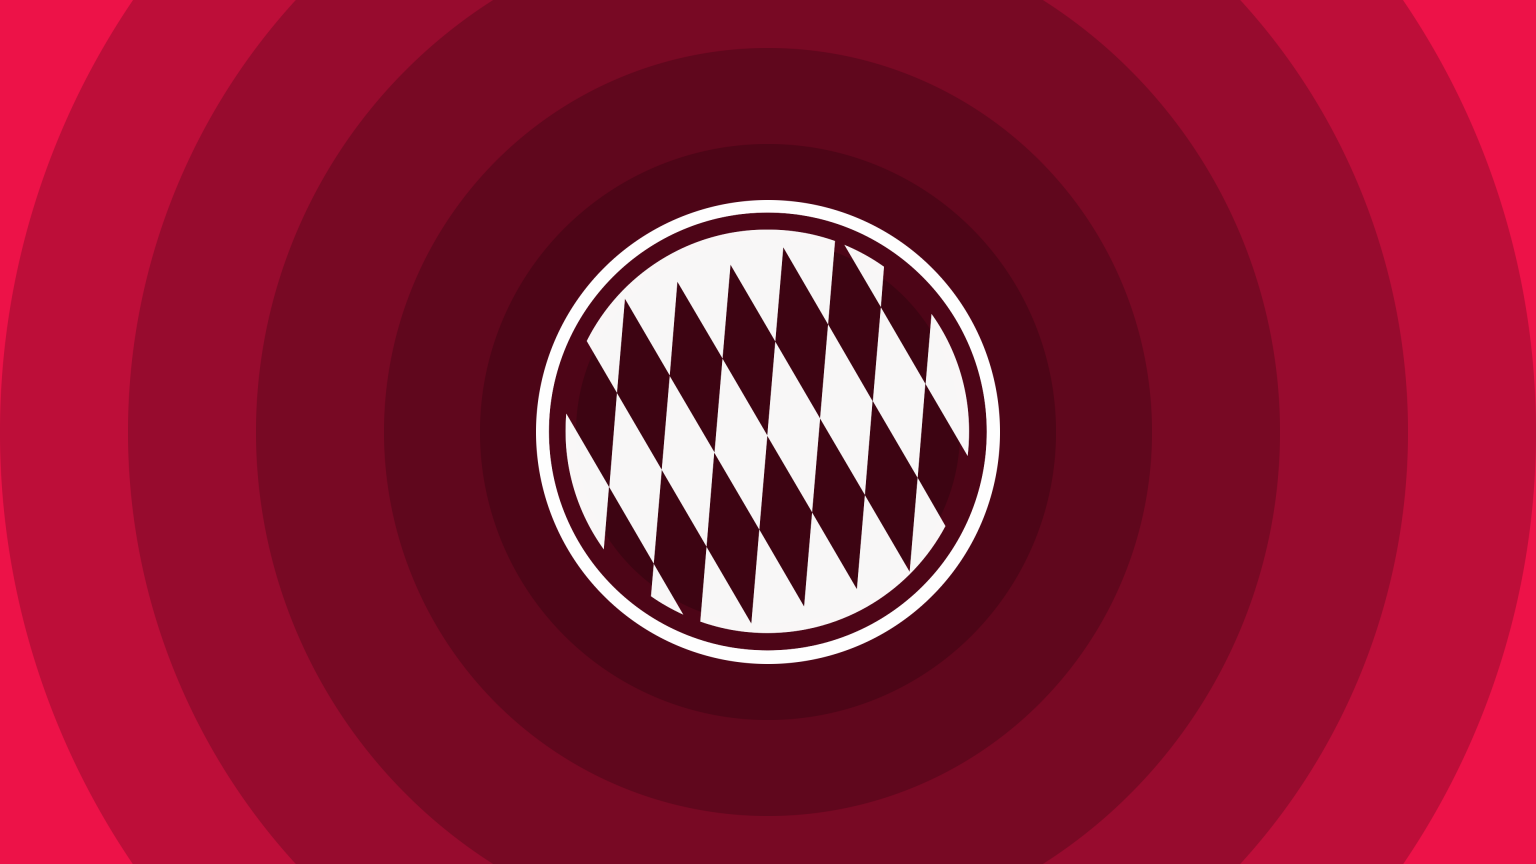 FC Bayern Munich Minimal Logo for 1536 x 864 HDTV resolution